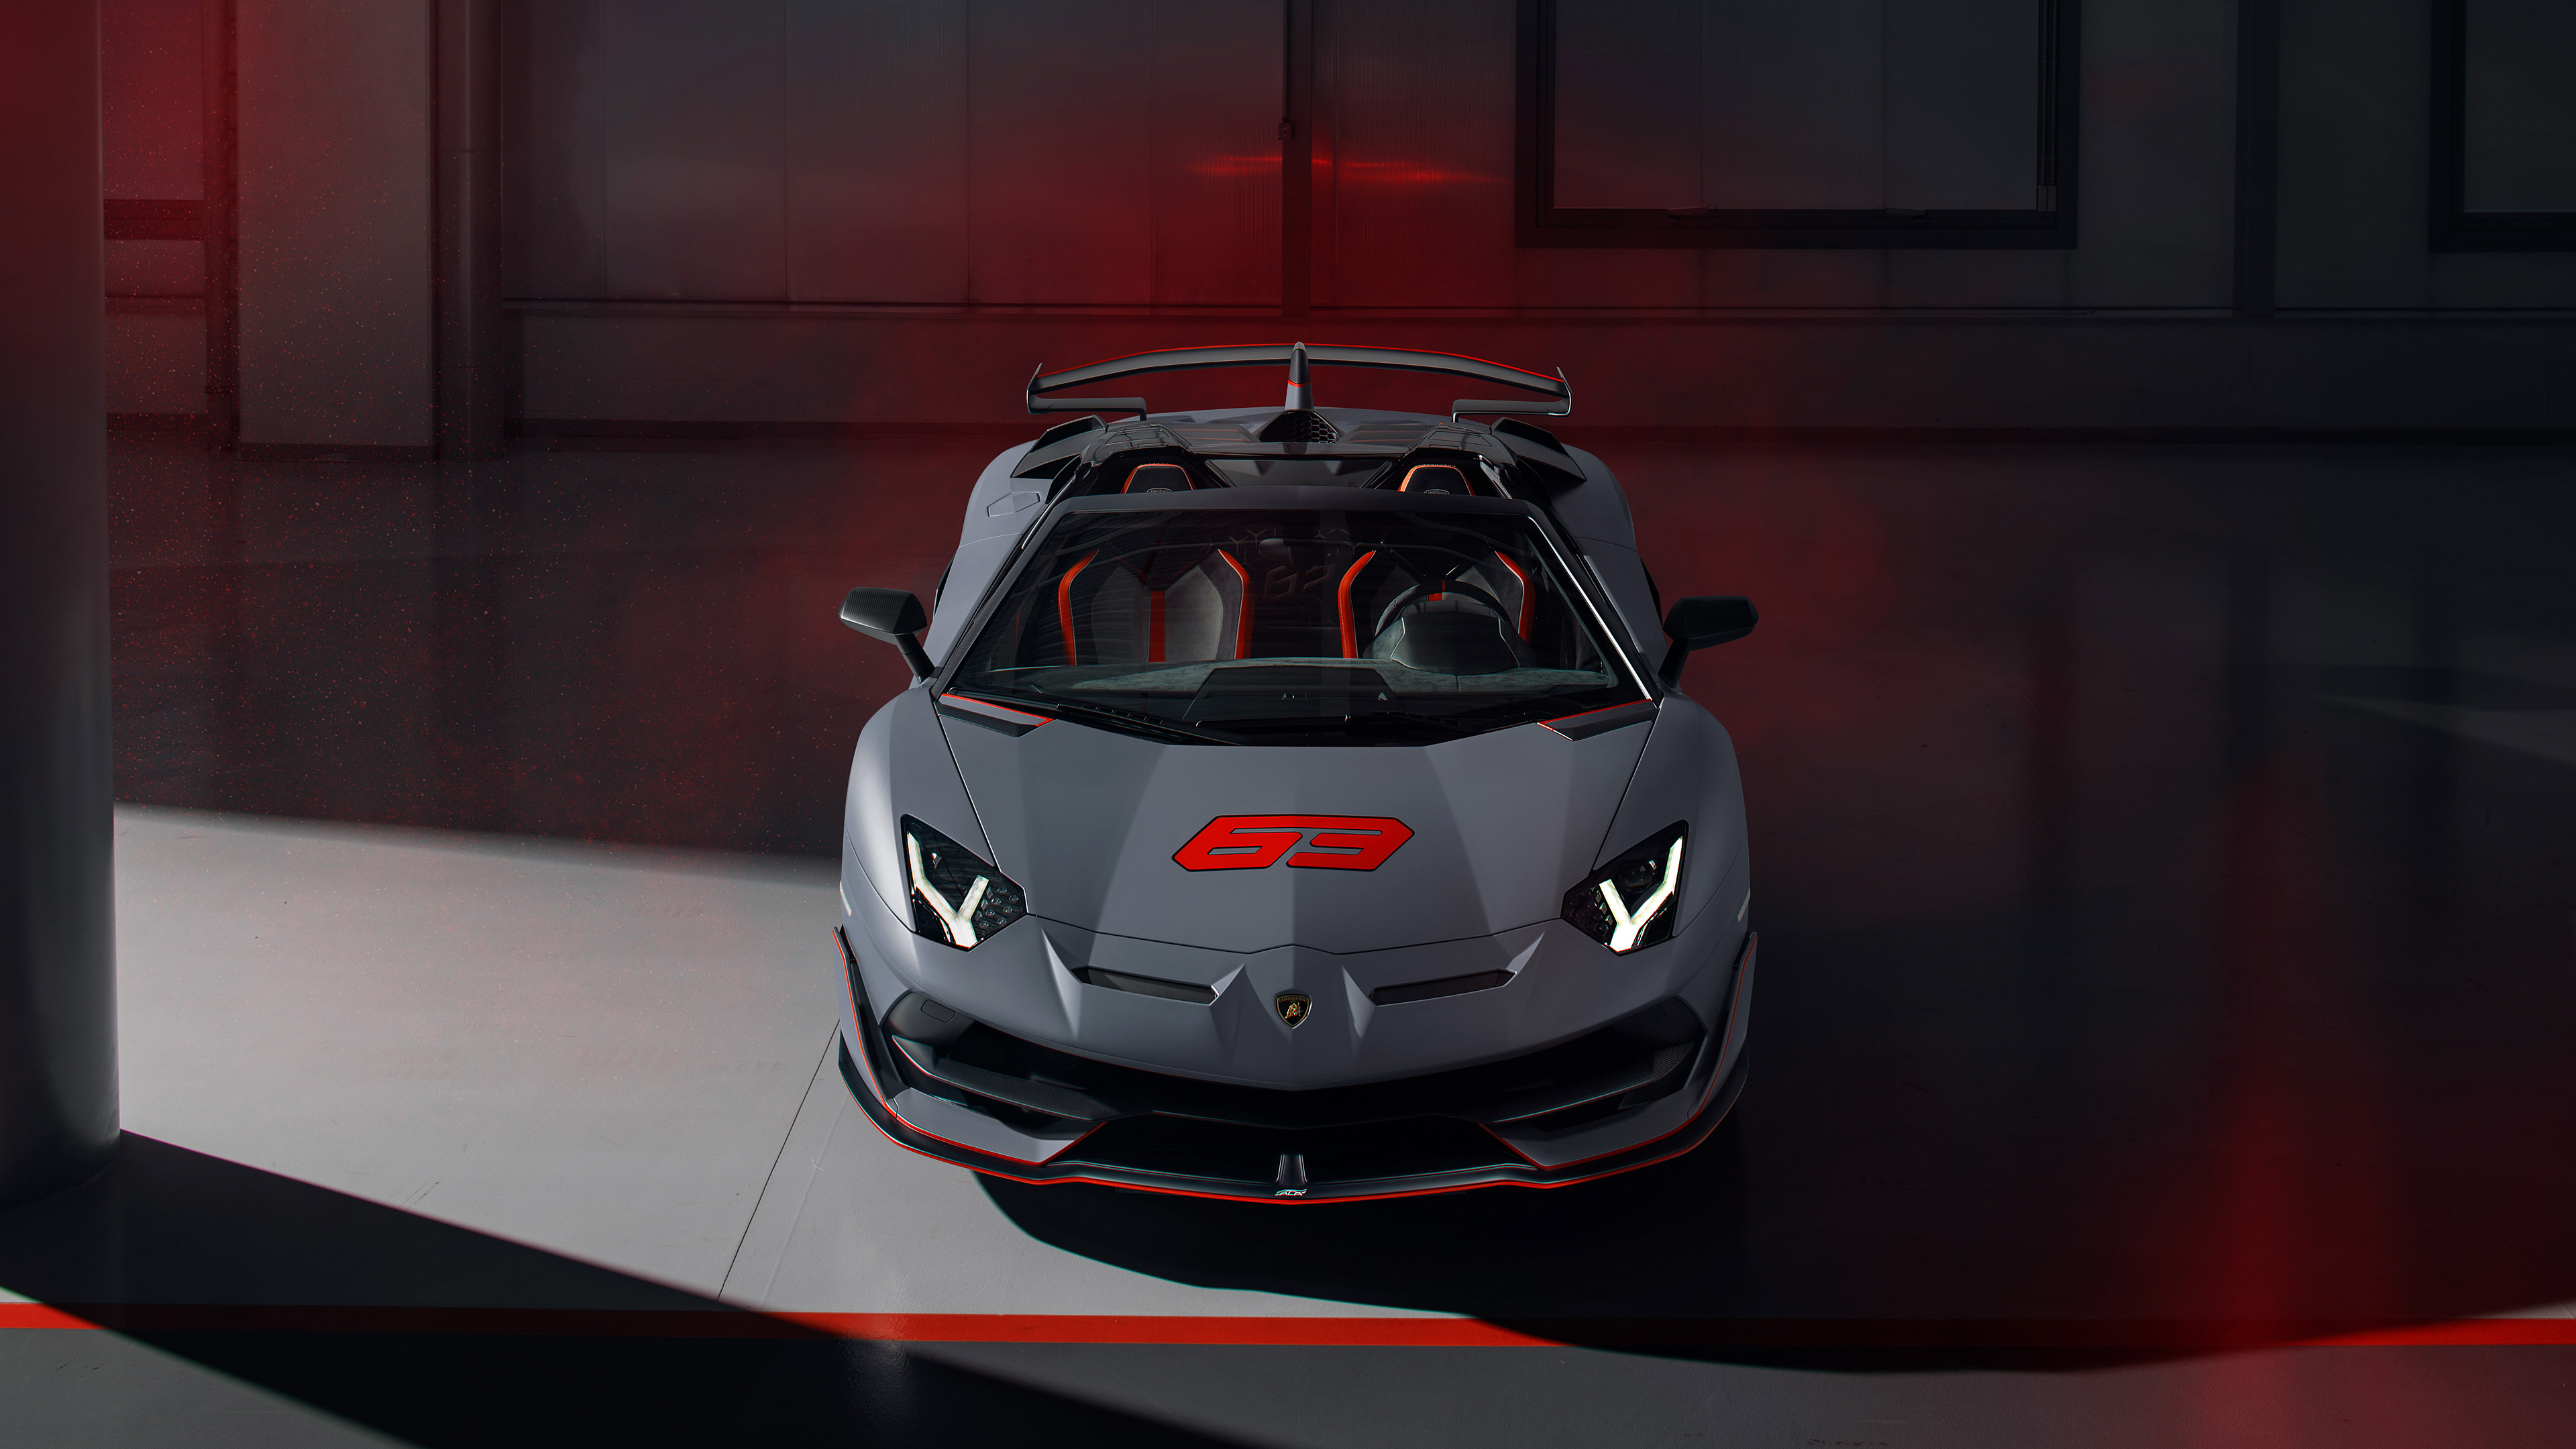  2020 Lamborghini Aventador SVJ 63 Roadster Wallpaper.